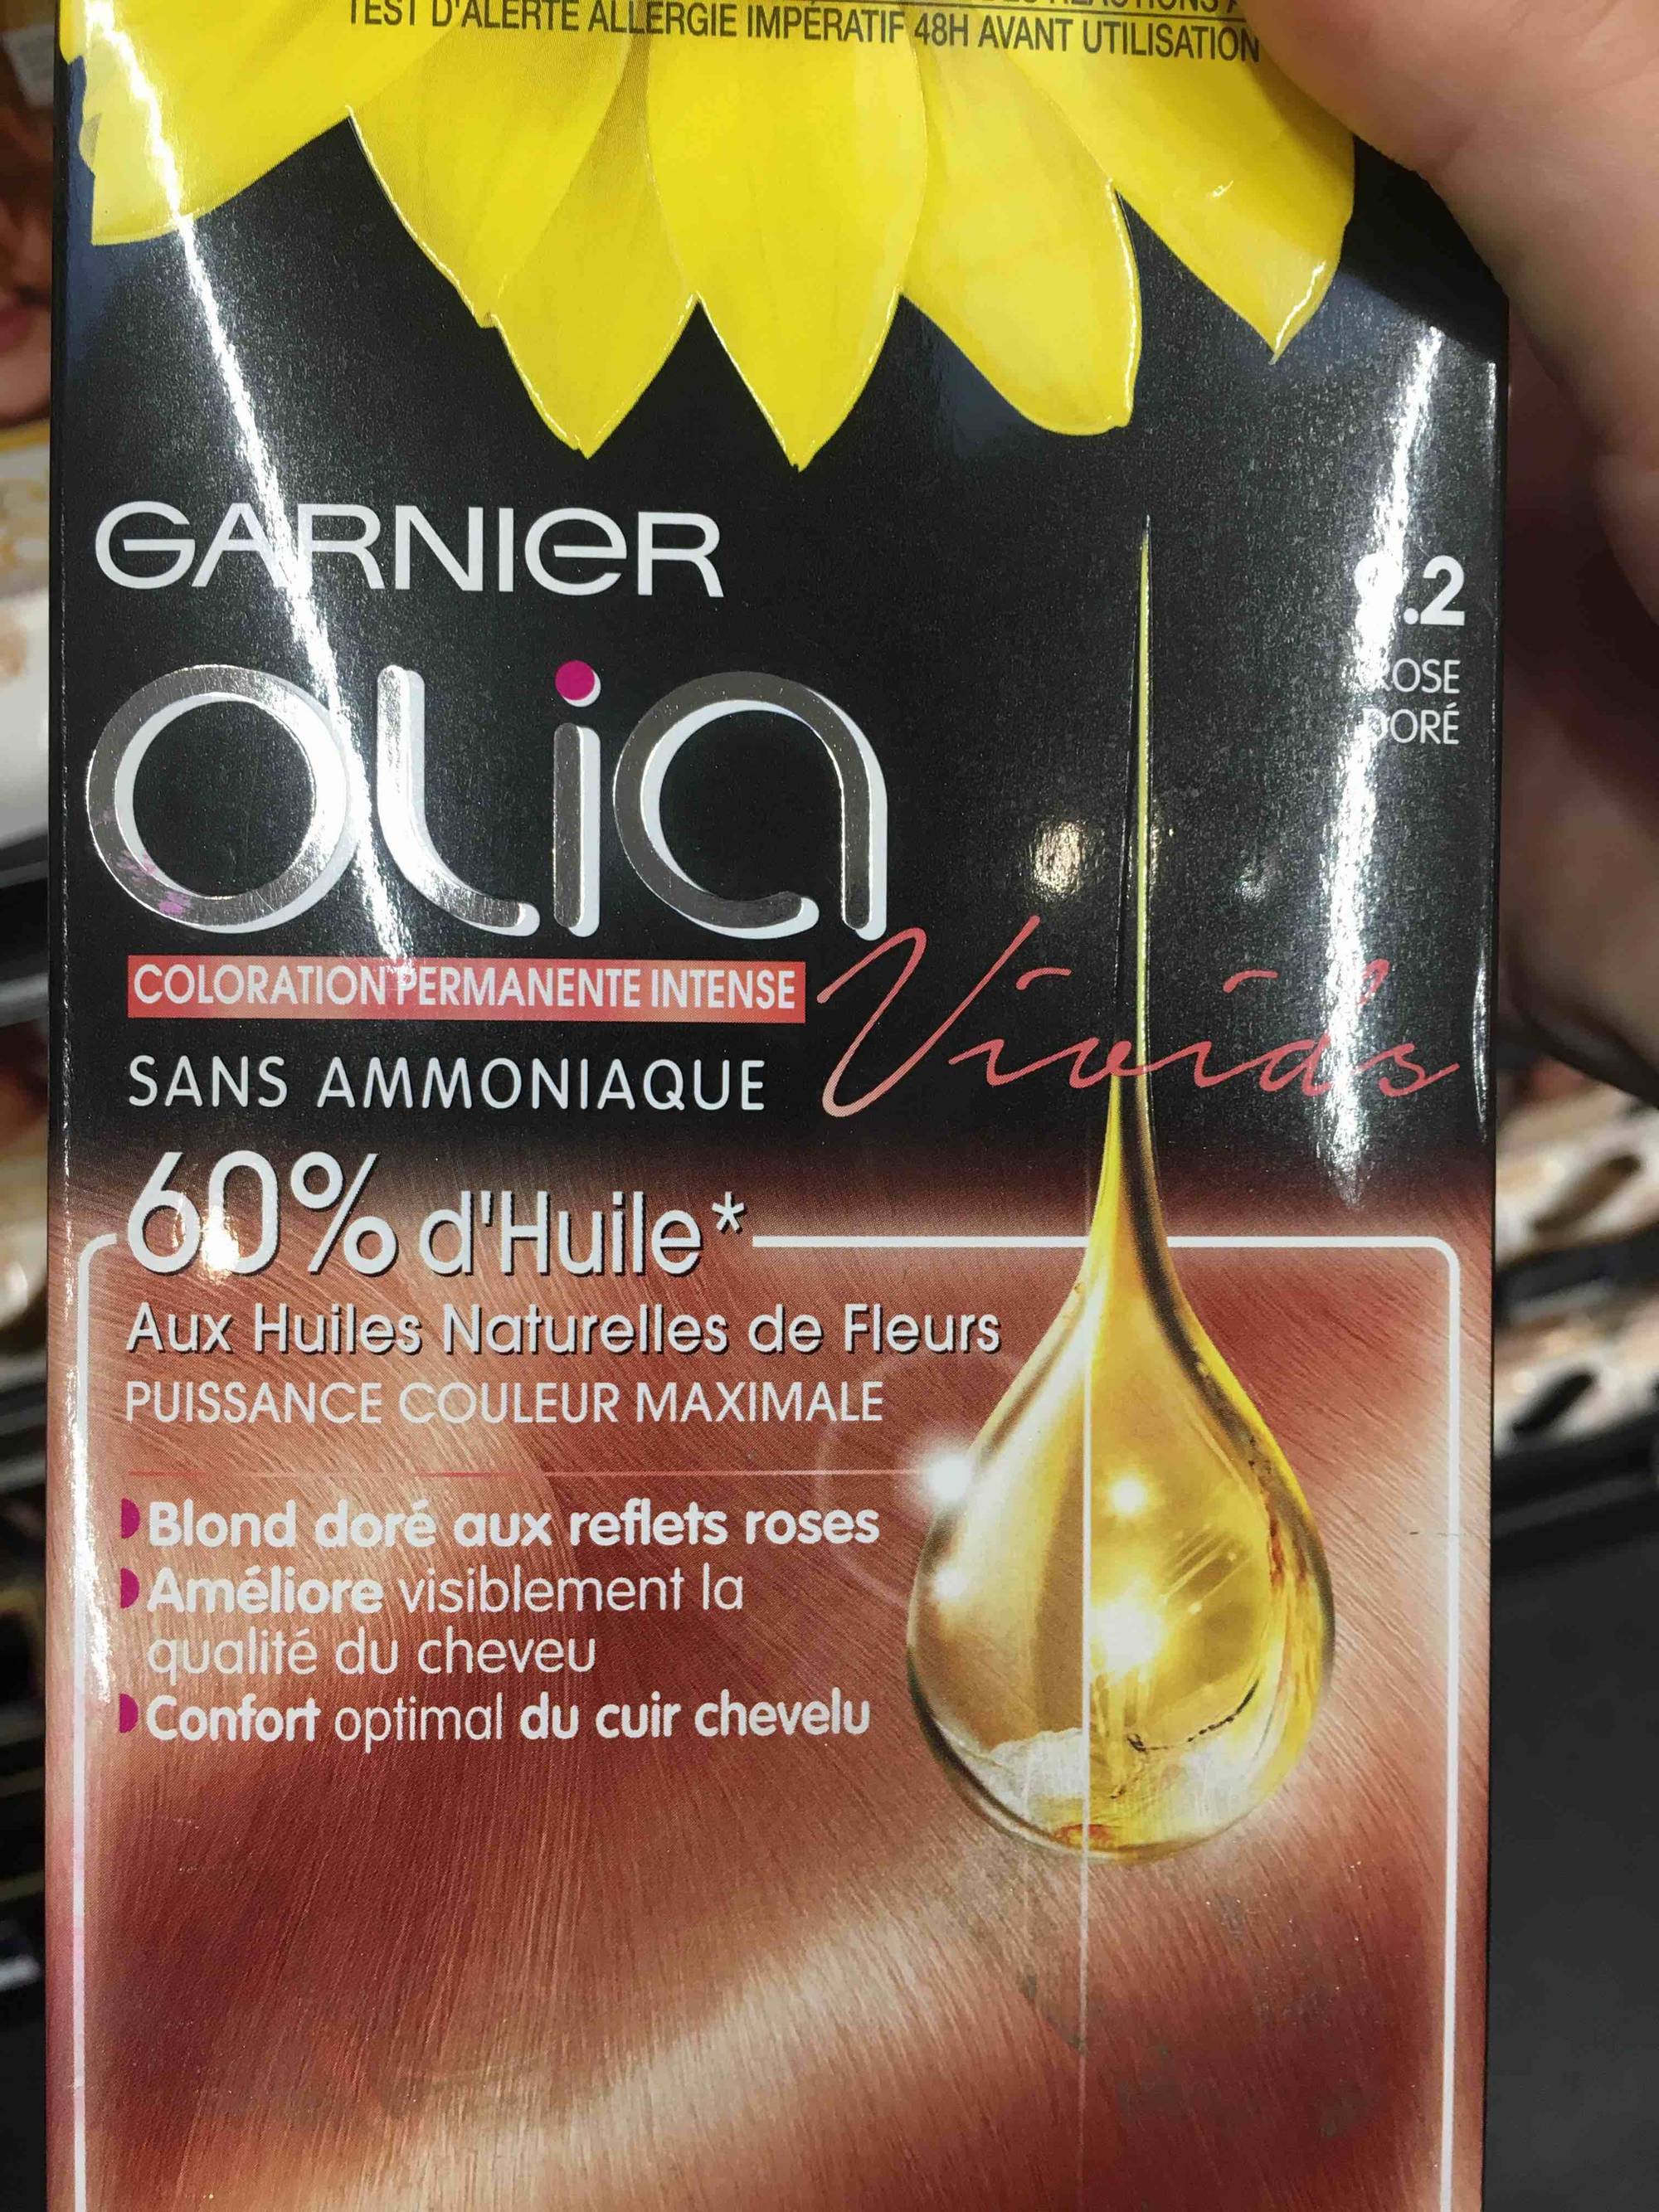 GARNIER - Olia vivids - Coloration permanente intense 9.2 rose doré